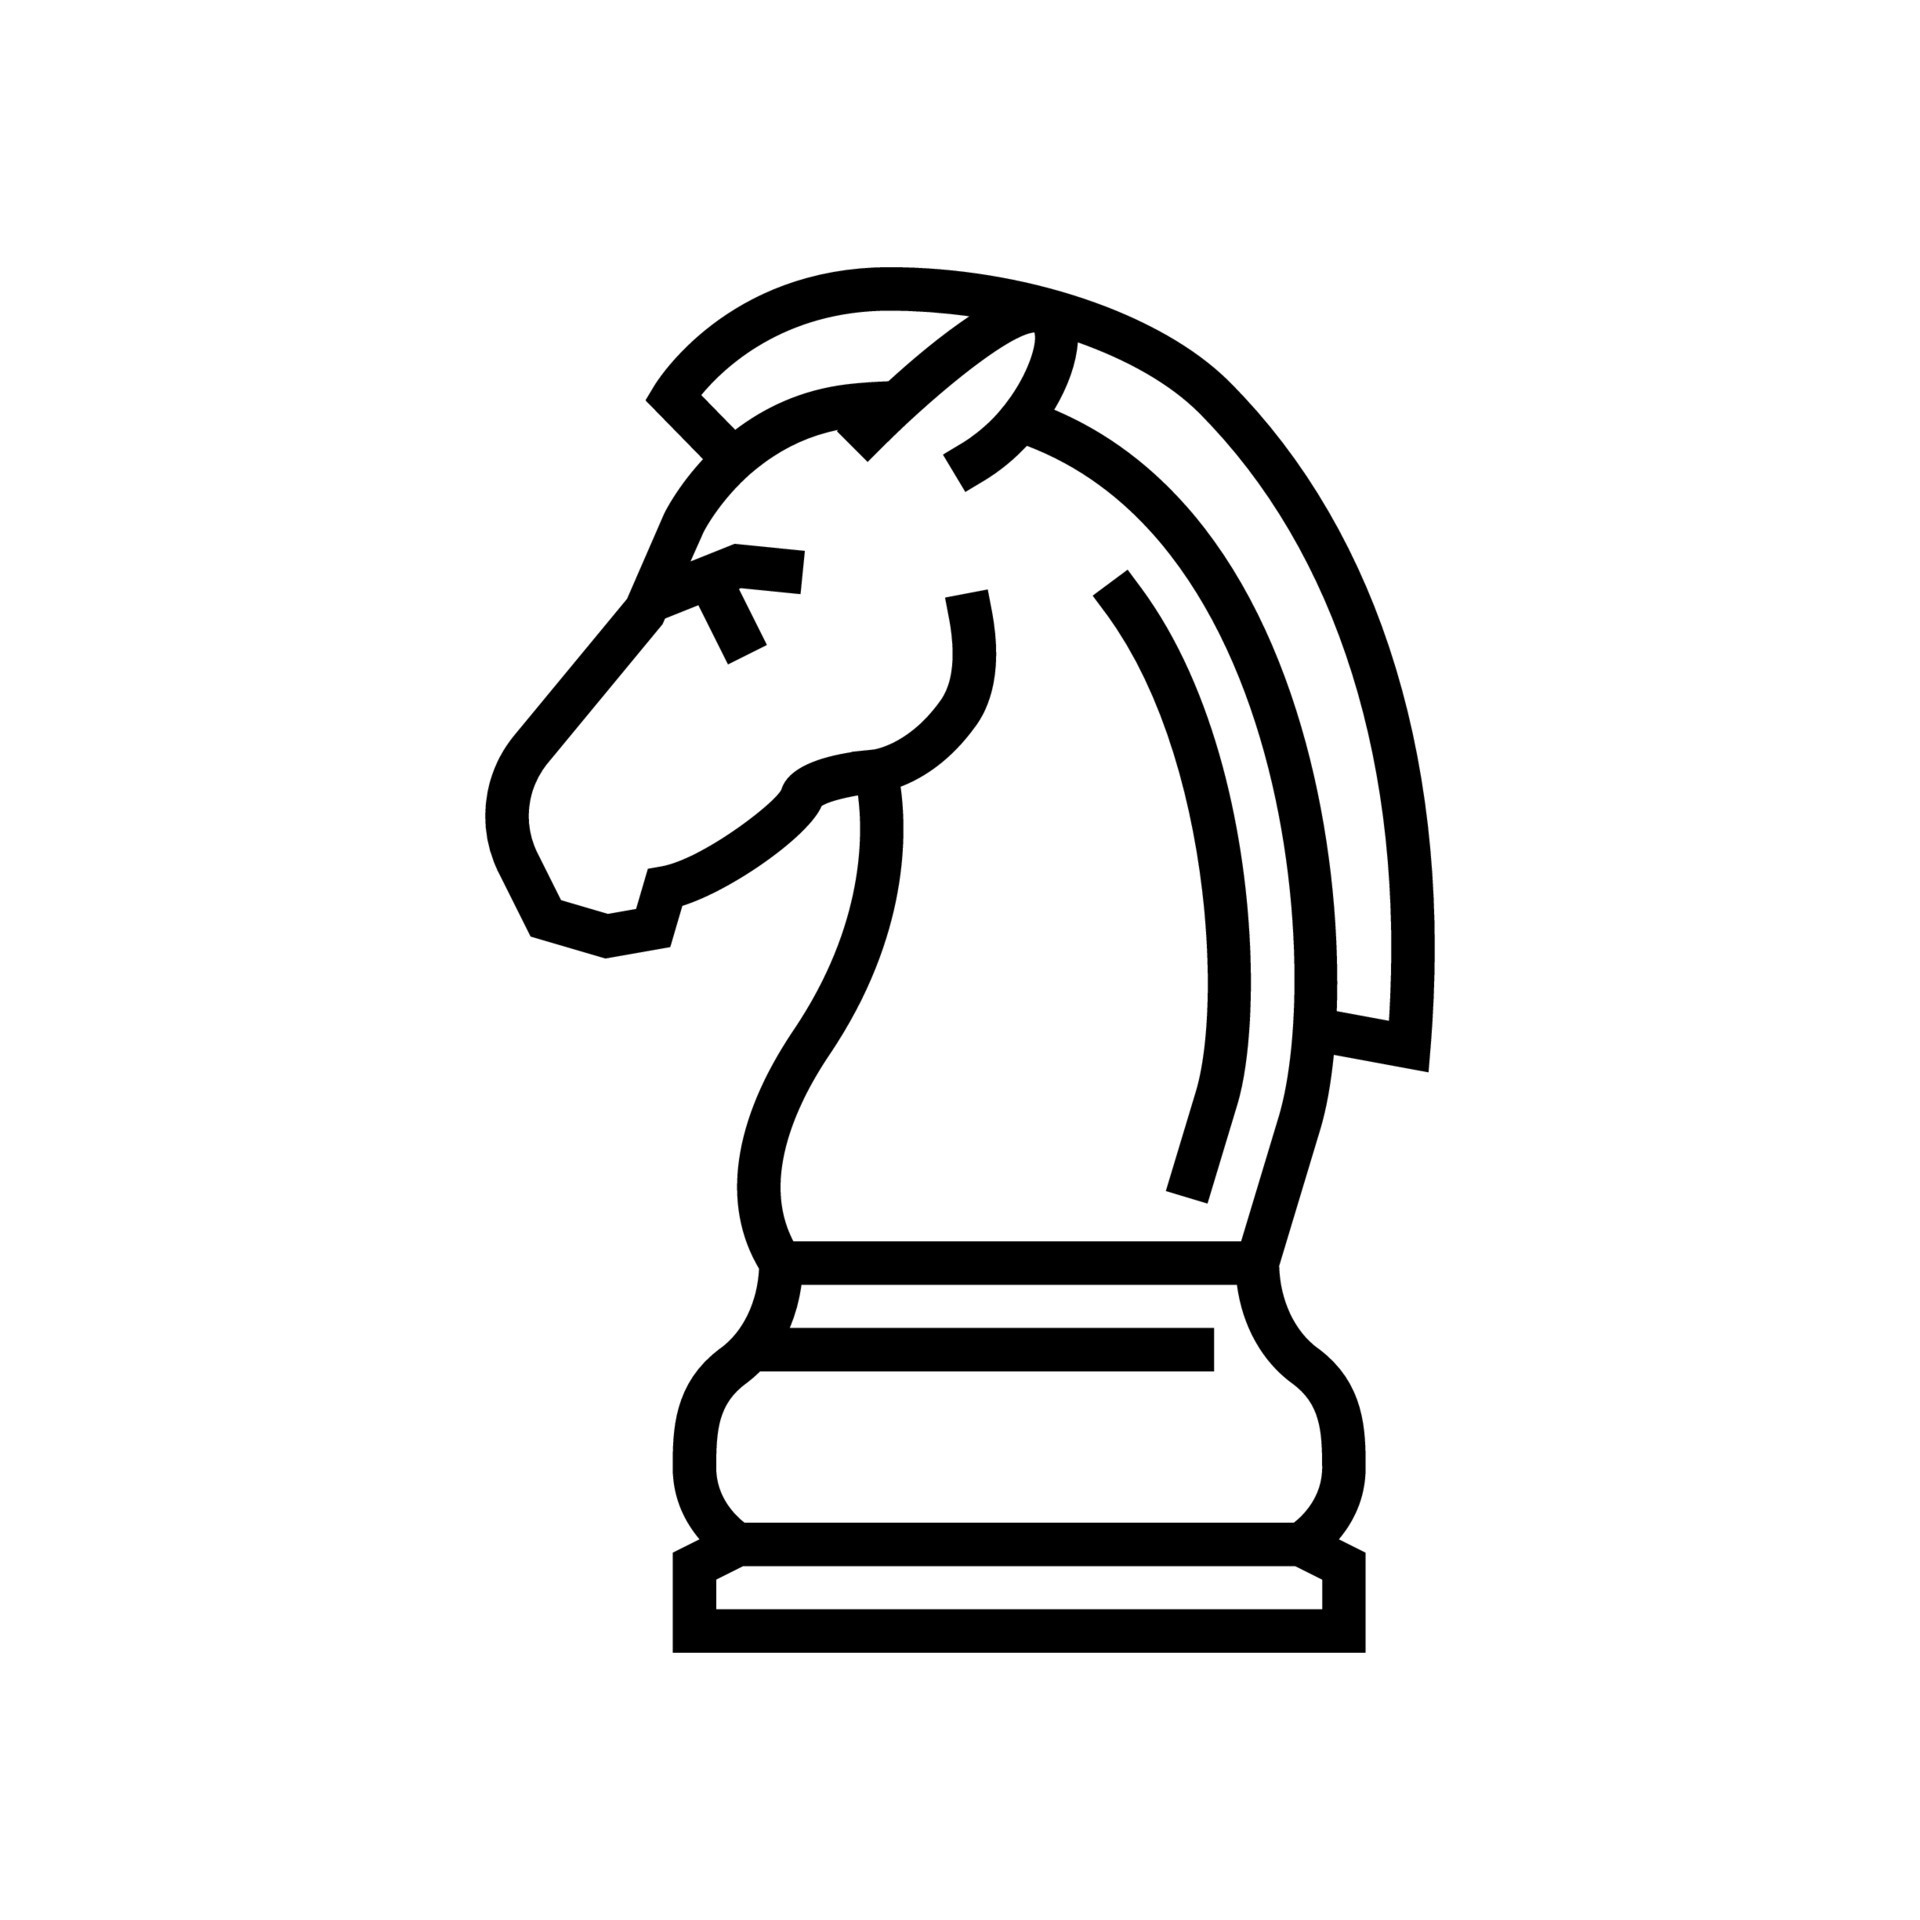 O Problema do passeio do cavalo (xadrez)